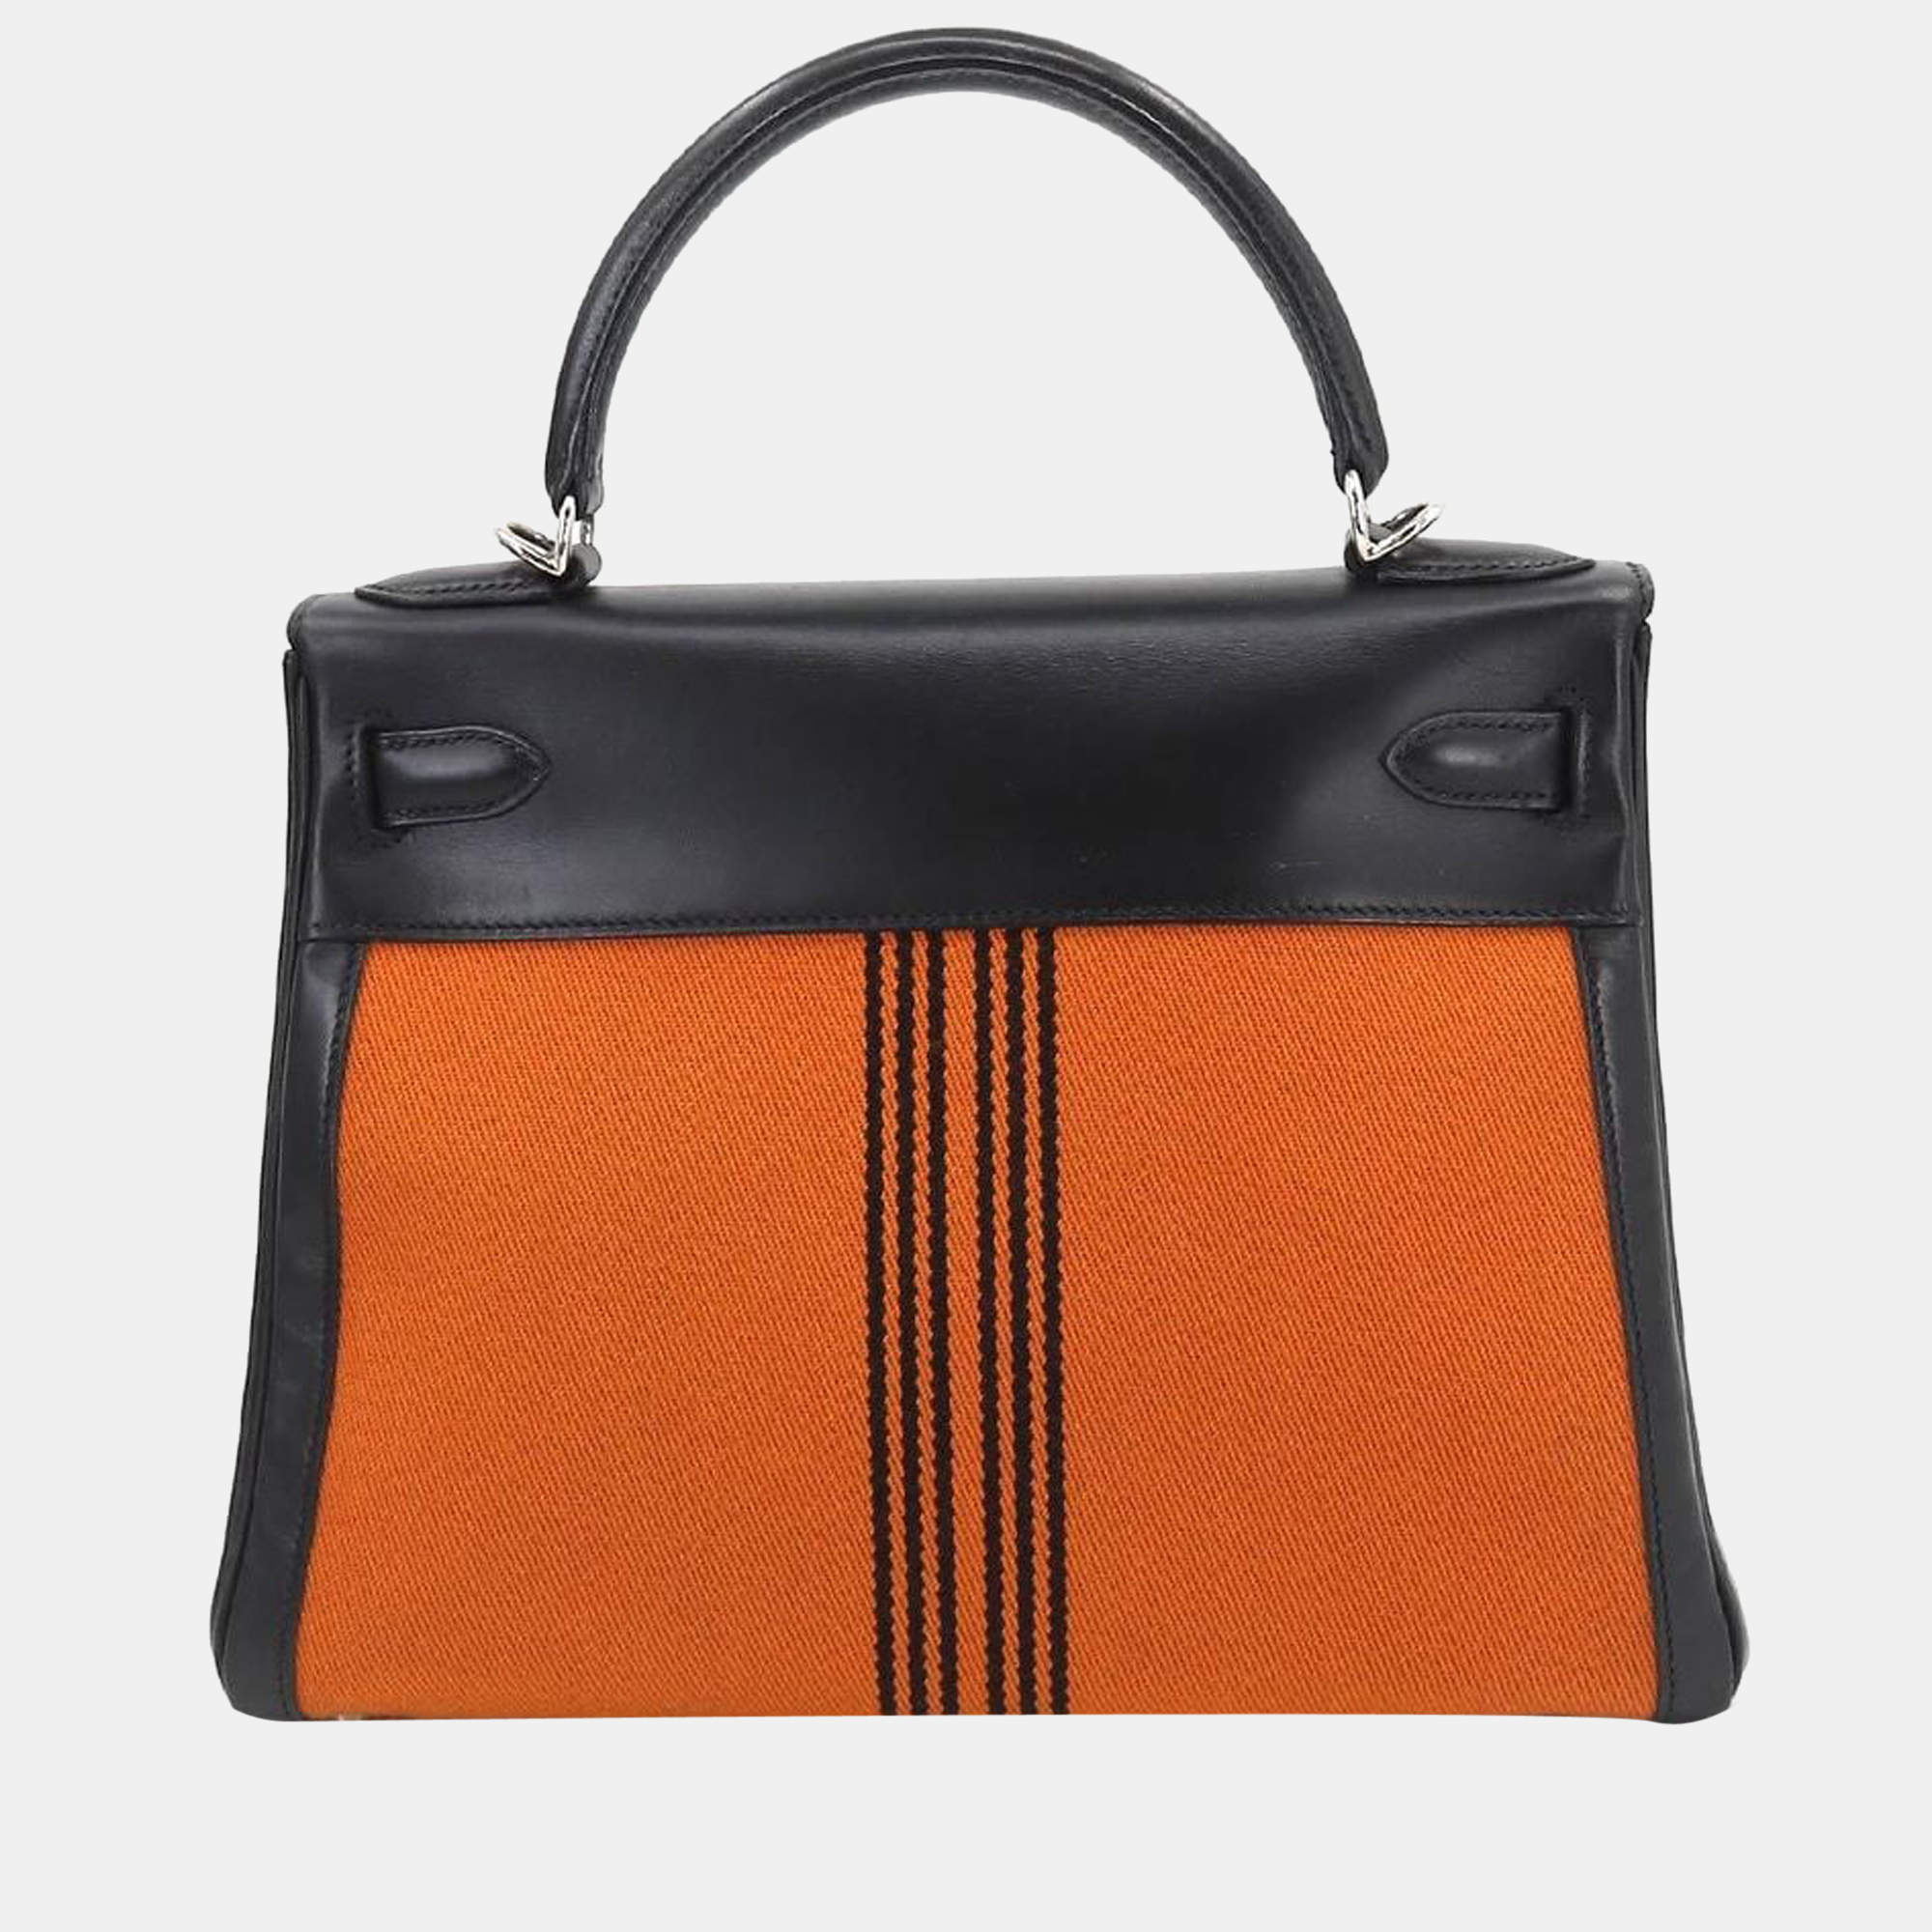 Hermès Kelly to Go Leather Handbag